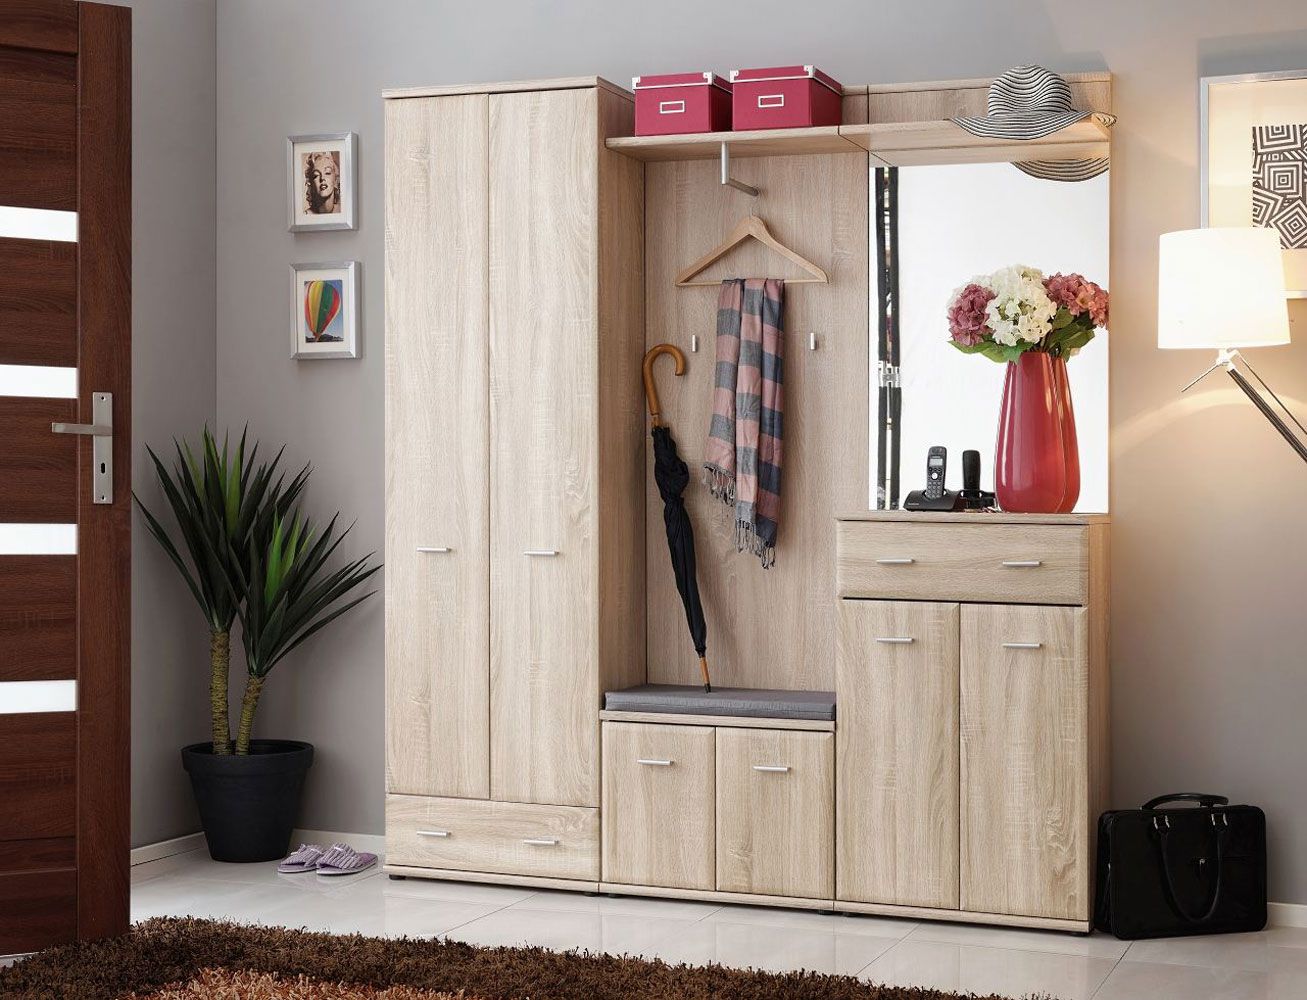 Elegant wardrobe Bratteli 05, color: oak Sonoma - Dimensions: 203 x 180 x 32 cm (H x W x D), with sufficient storage space